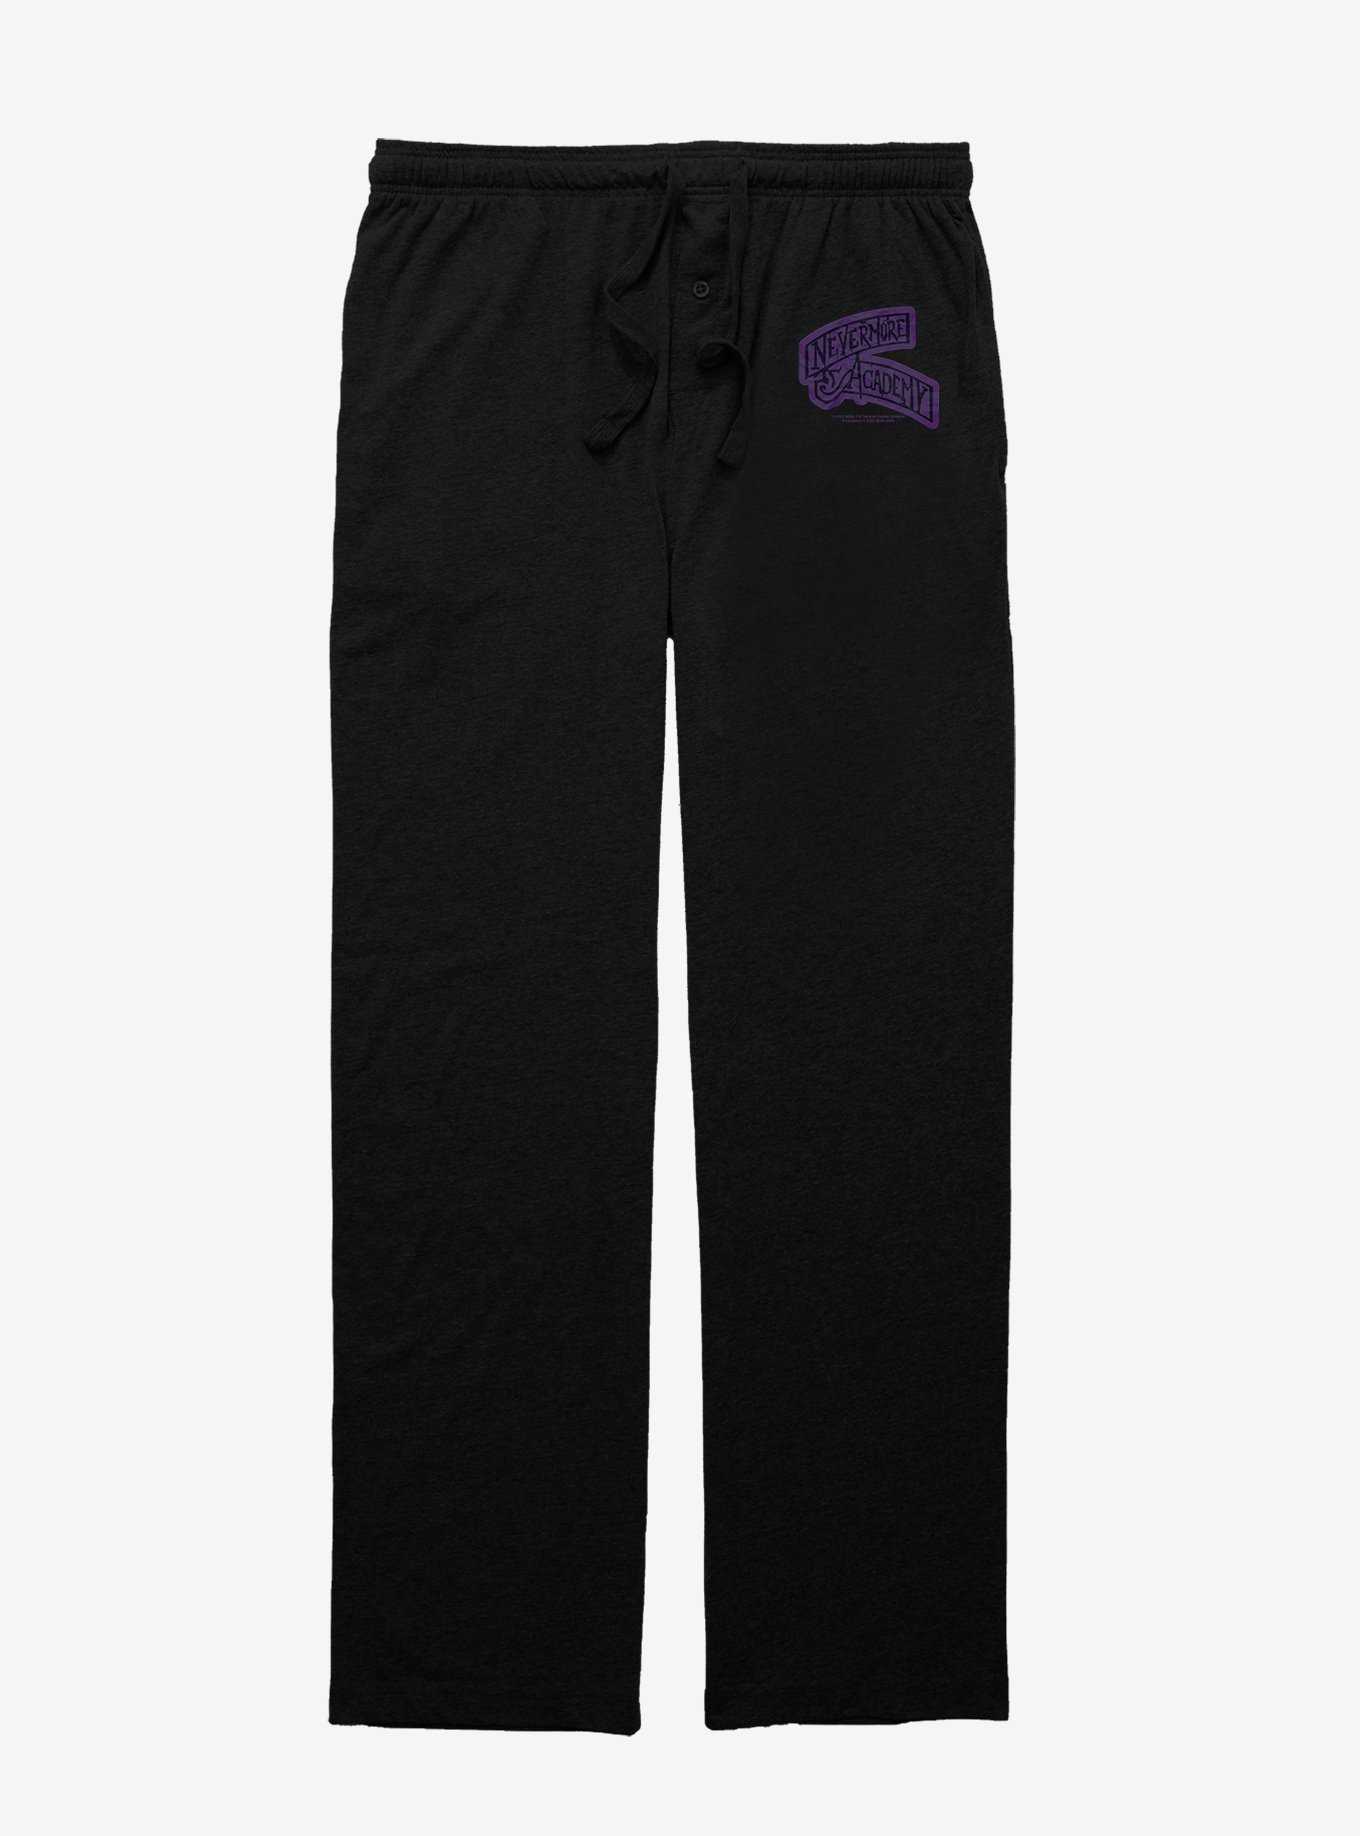 Wednesday Nevermore Academy Pajama Pants, , hi-res